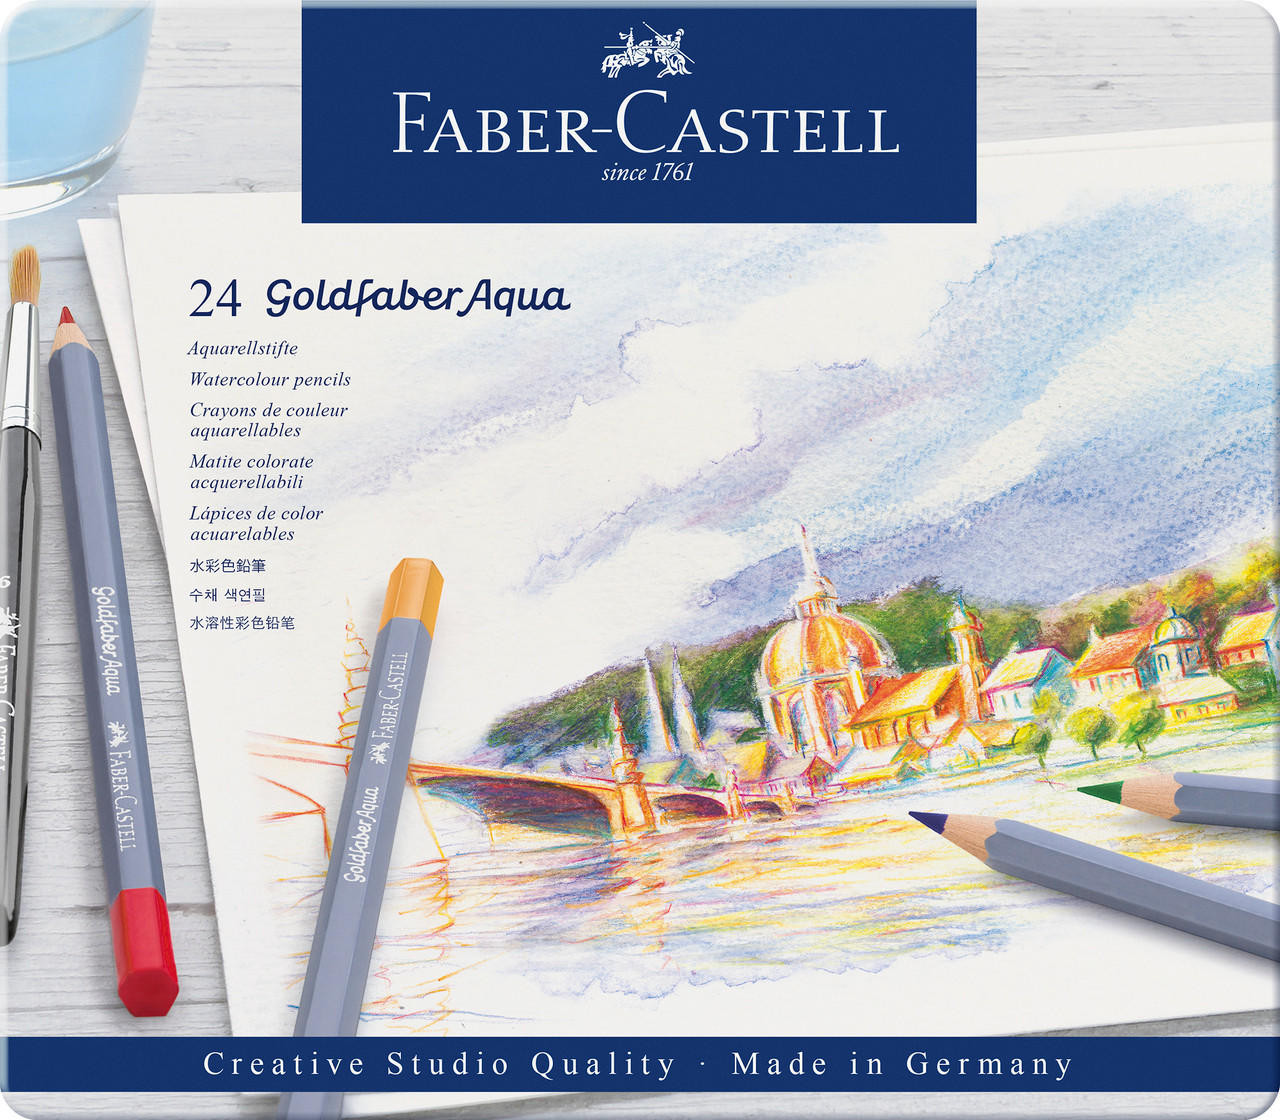 Faber-Castell Faber Castell Goldfaber Aqua Watercolour Pencil Set of 24